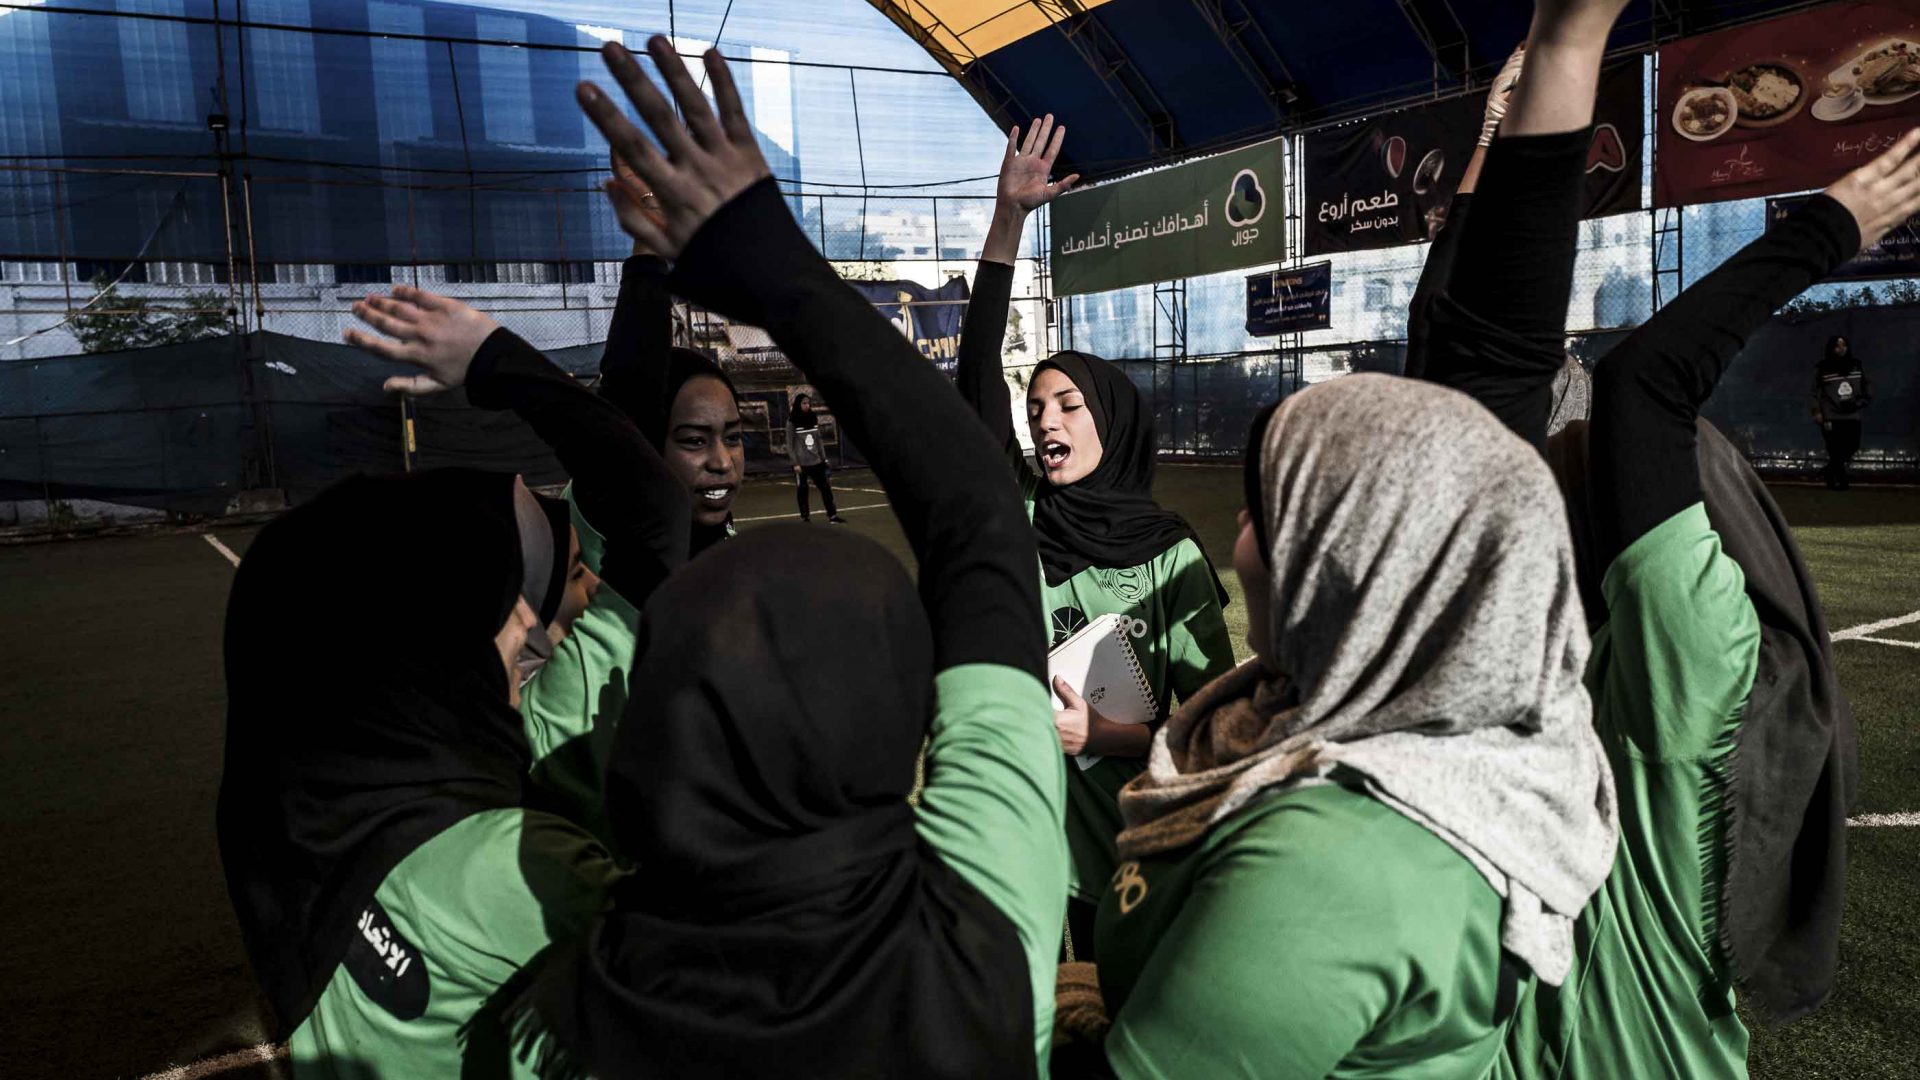 The women's baseball team in Gaza.